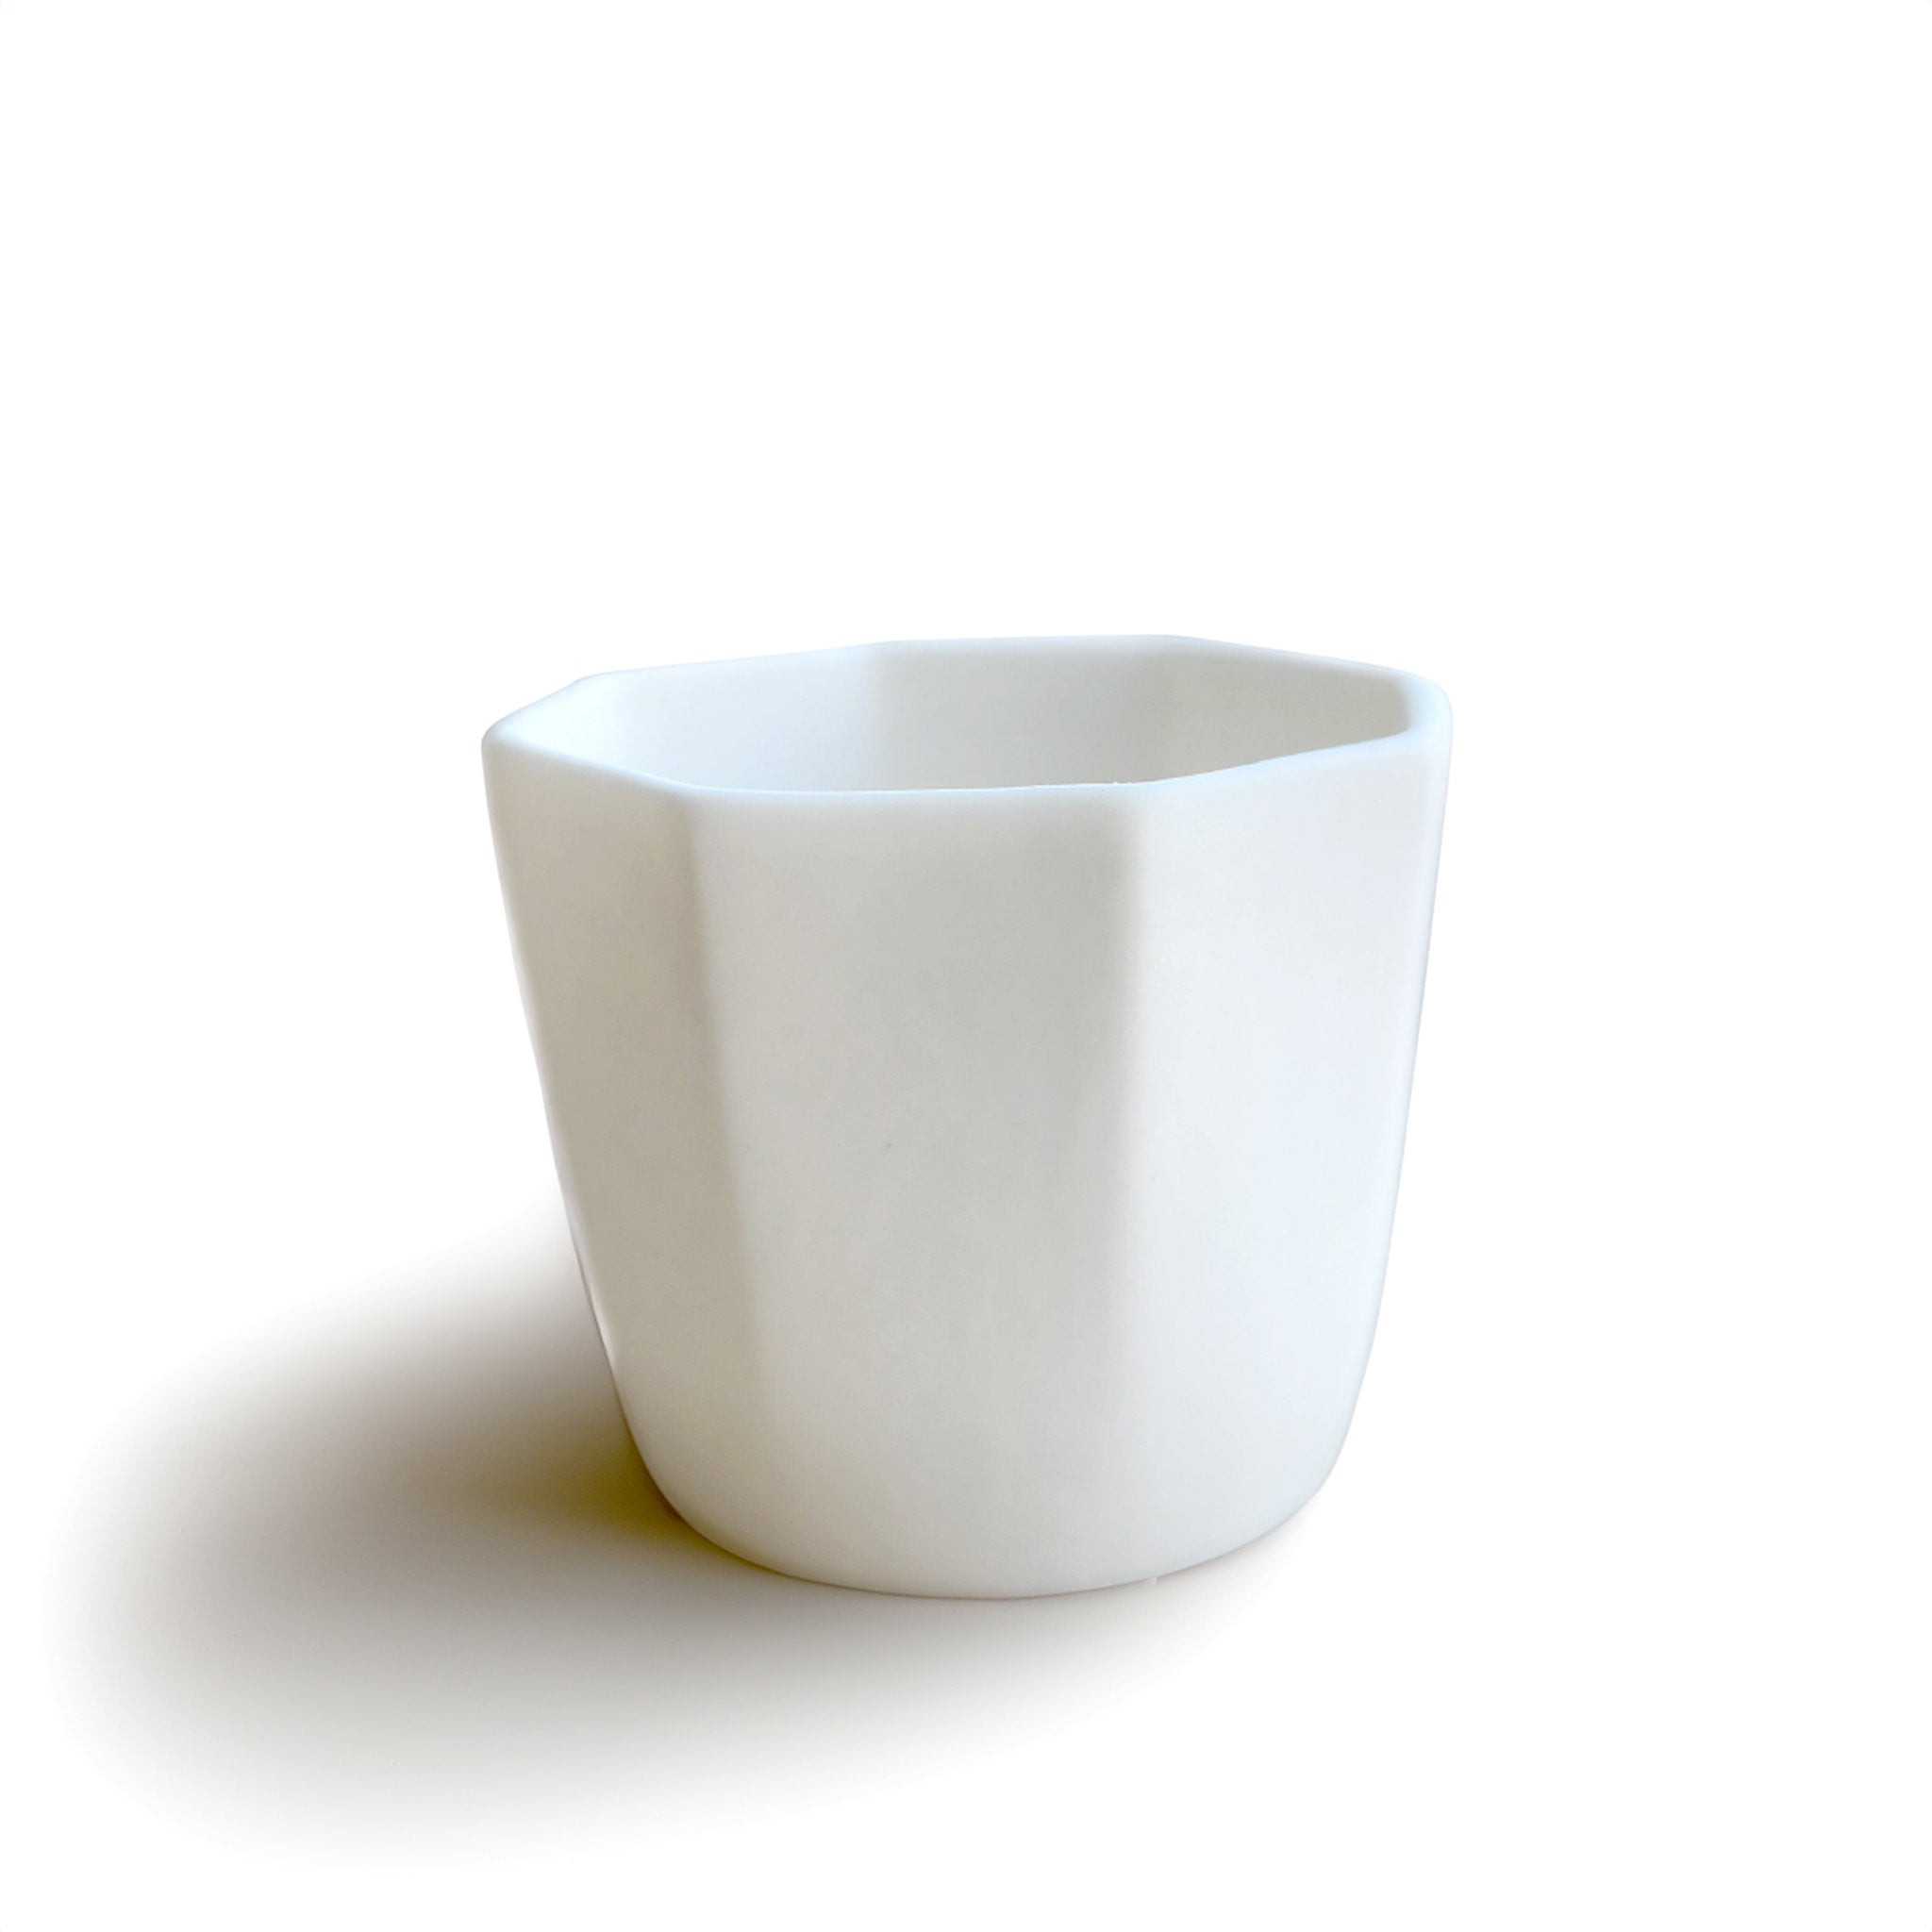 Translucent Porcelain Tea Light Holder The Bright Angle